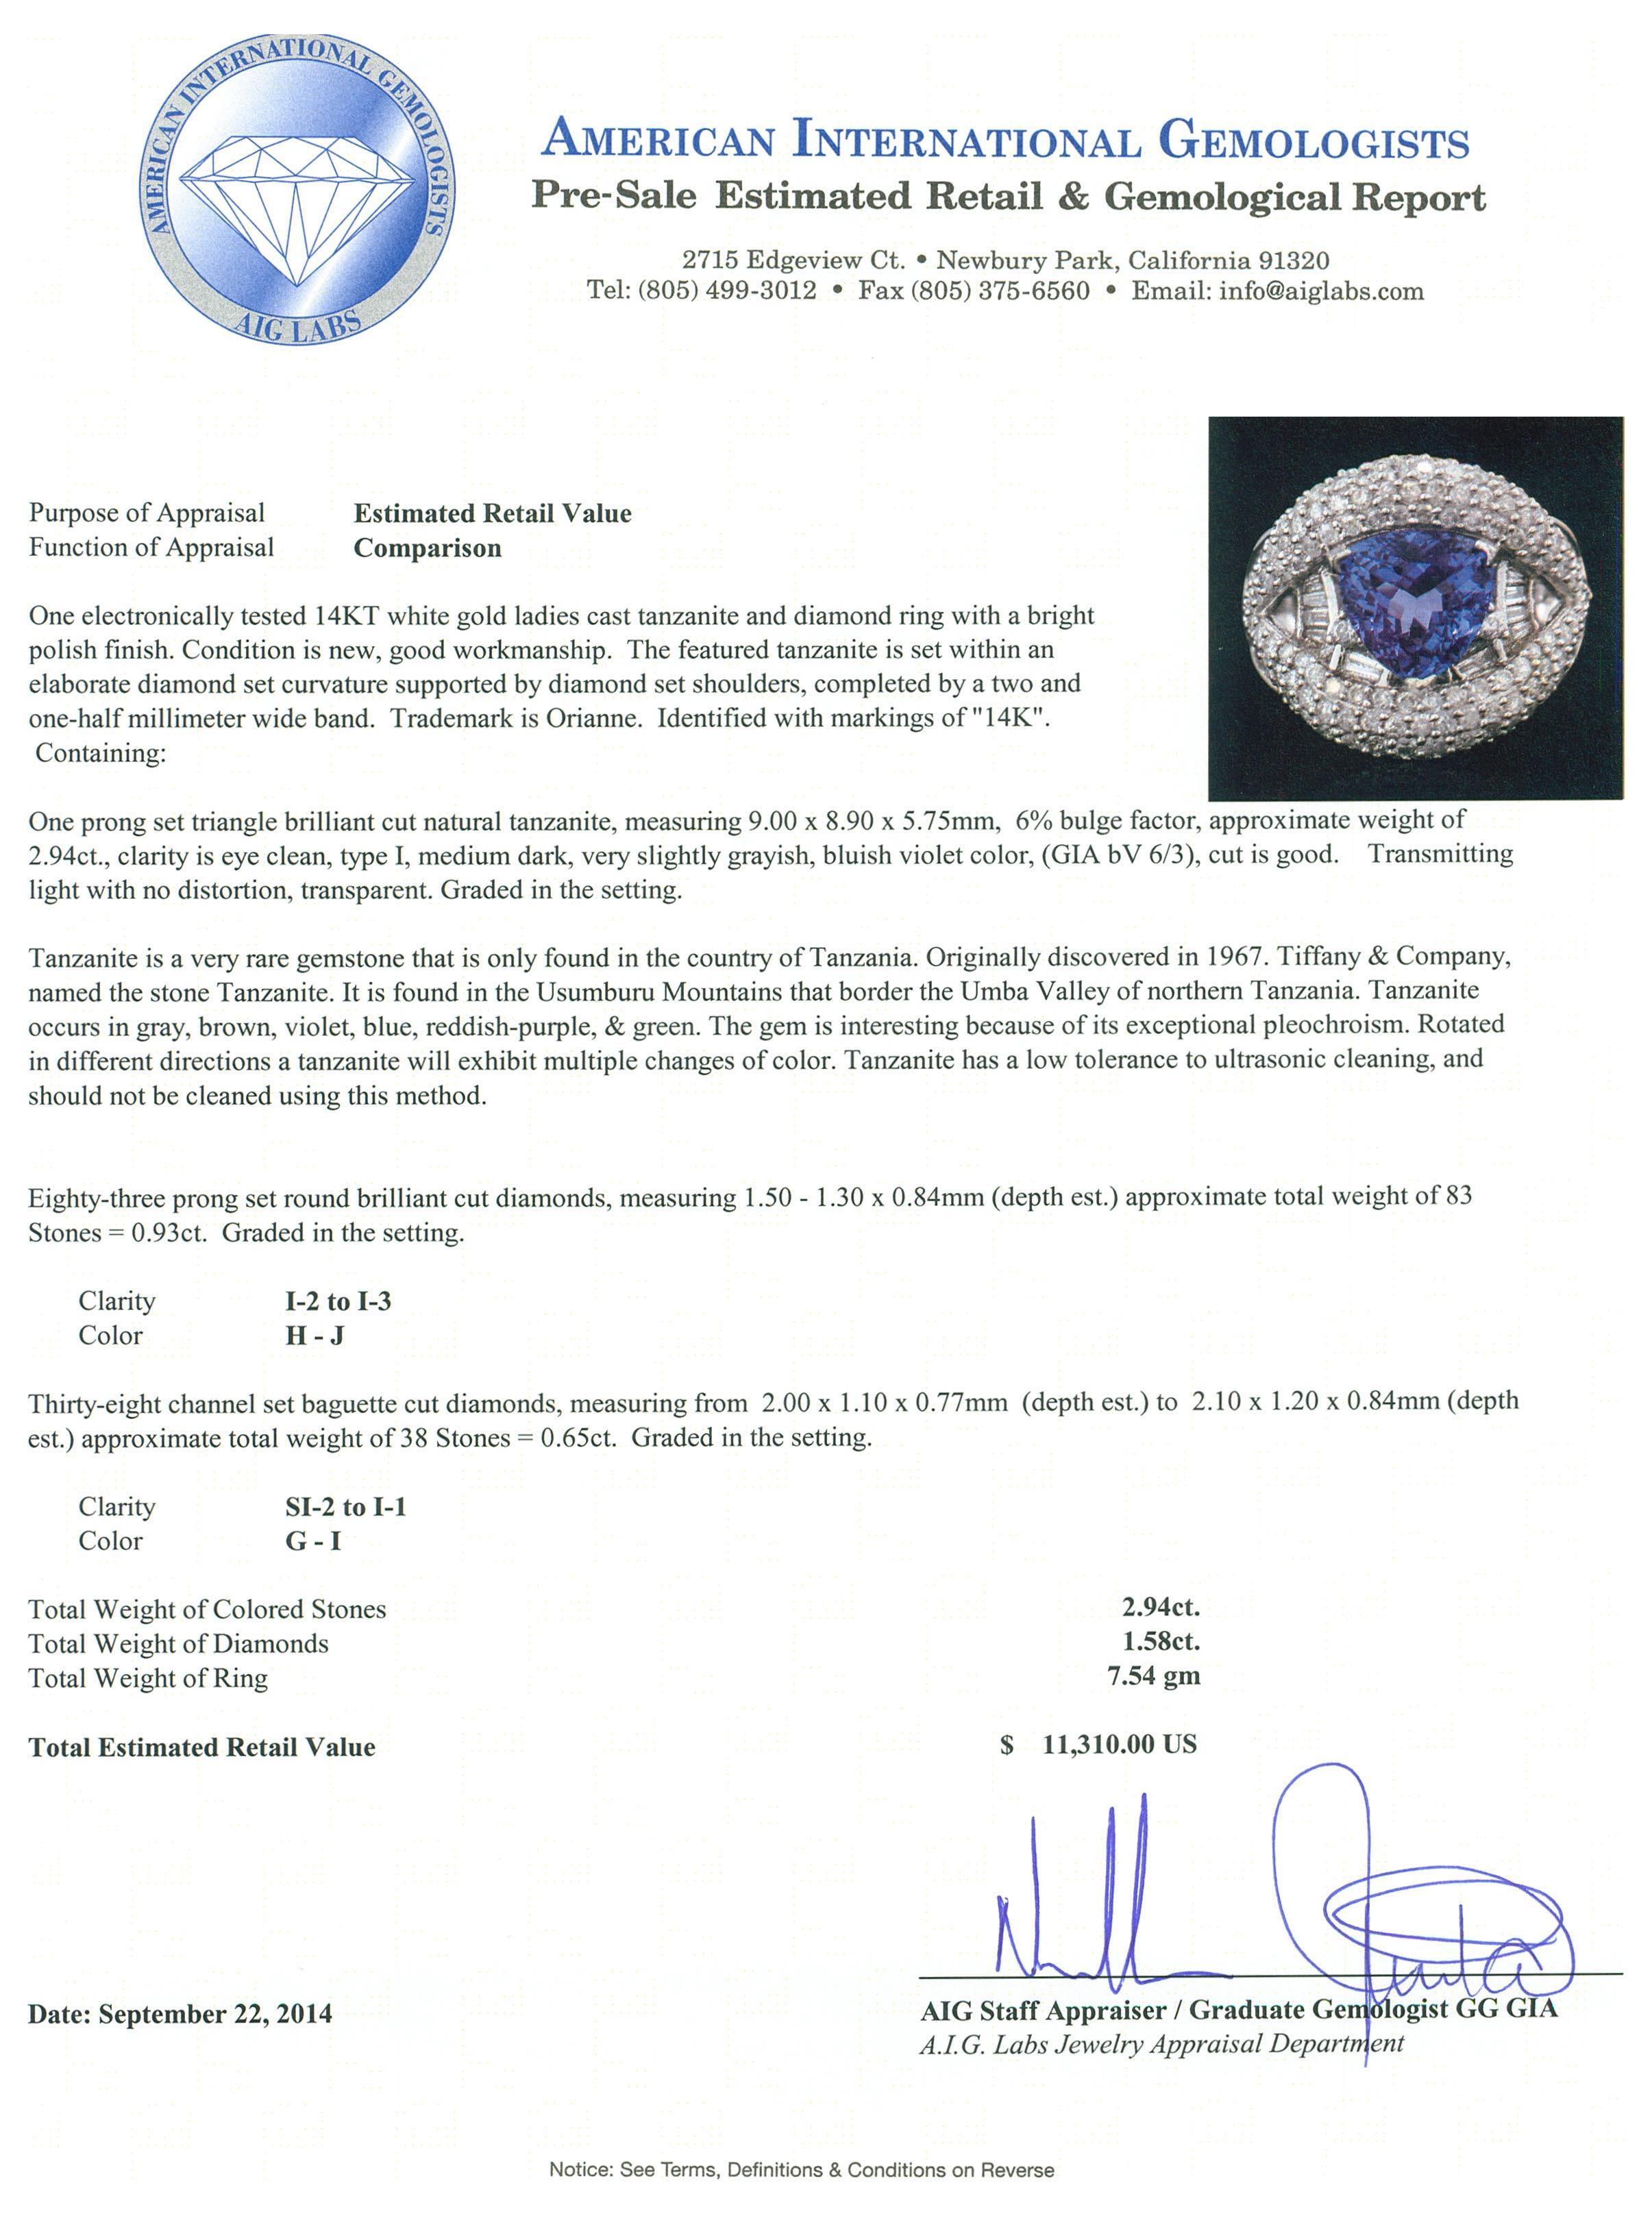 14KT White Gold 2.94 ctw Tanzanite and Diamond Ring